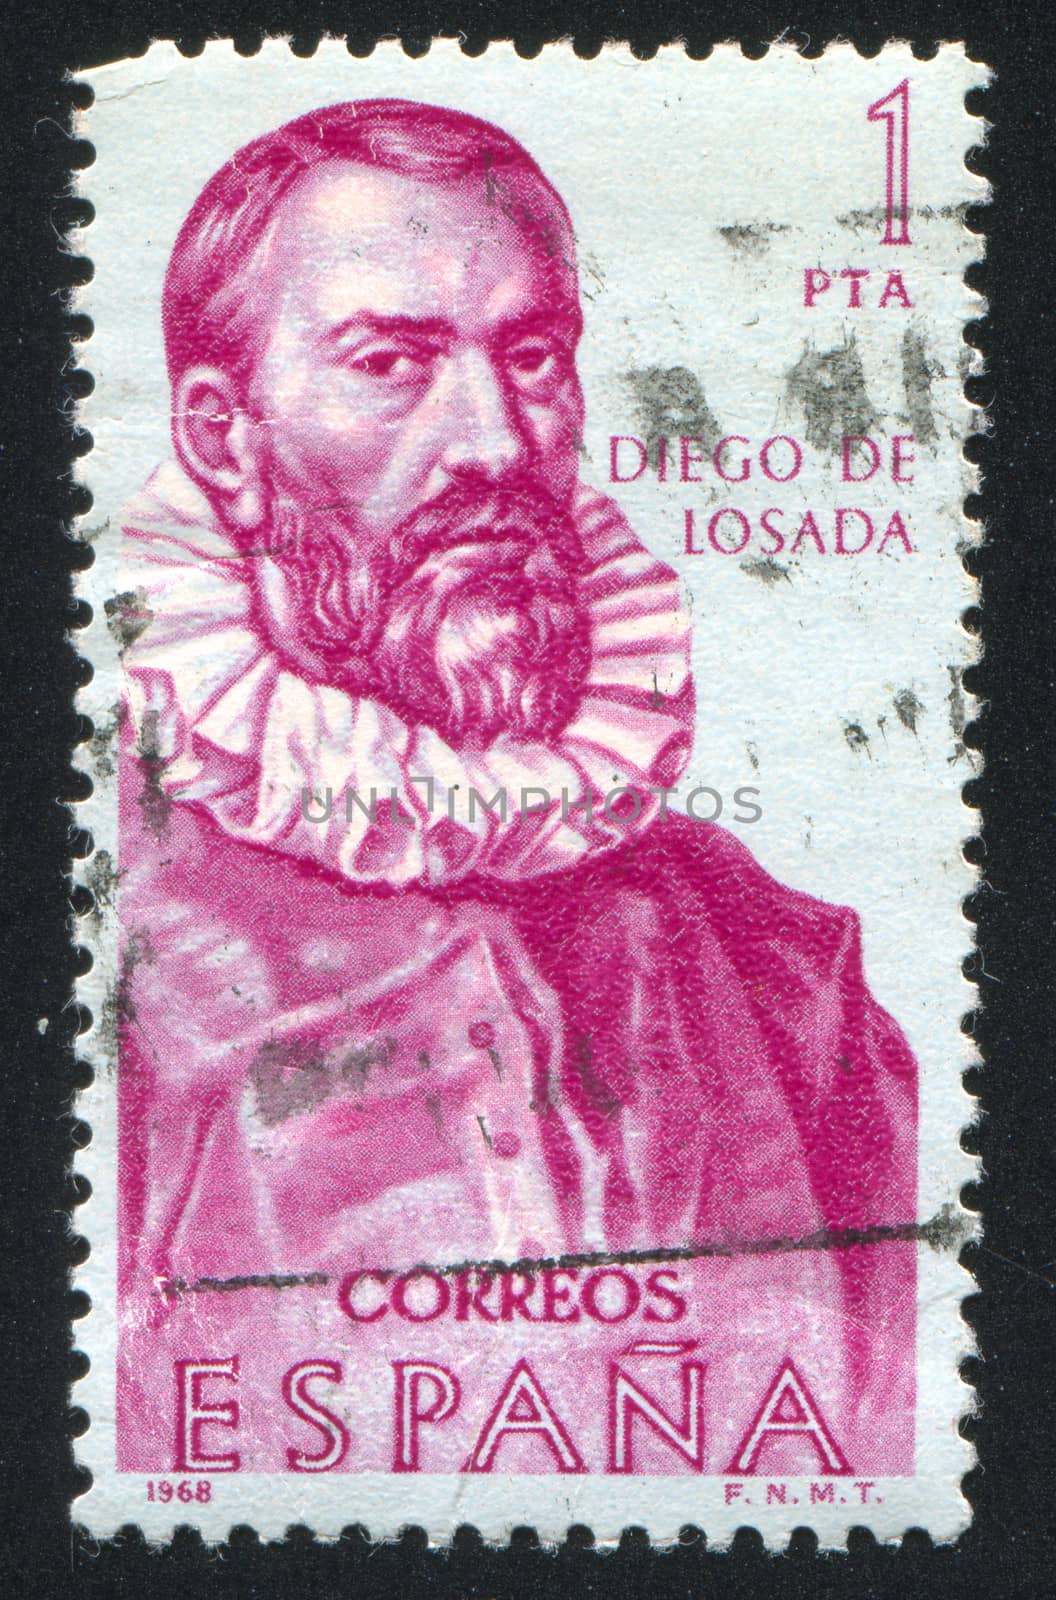 SPAIN - CIRCA 1968: stamp printed by Spain, shows Diego de Losada, circa 1968